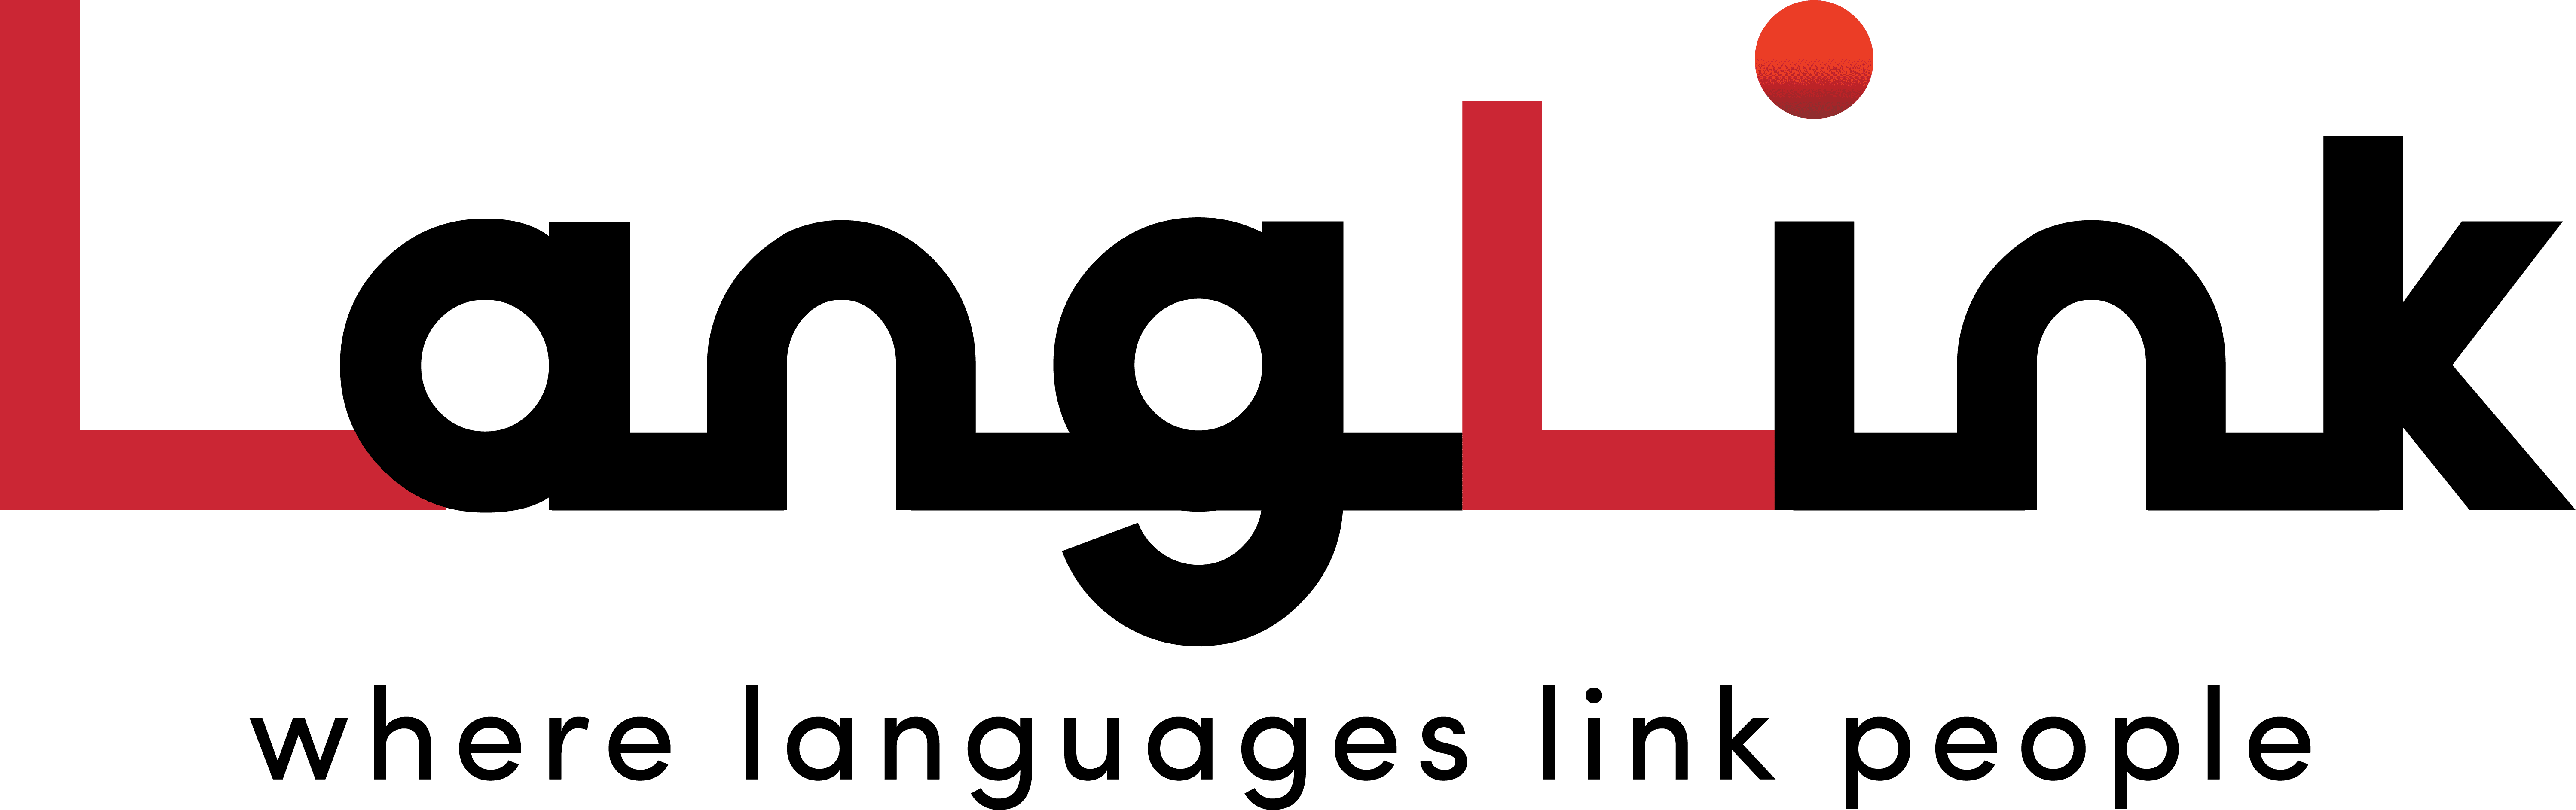 Langlink logo